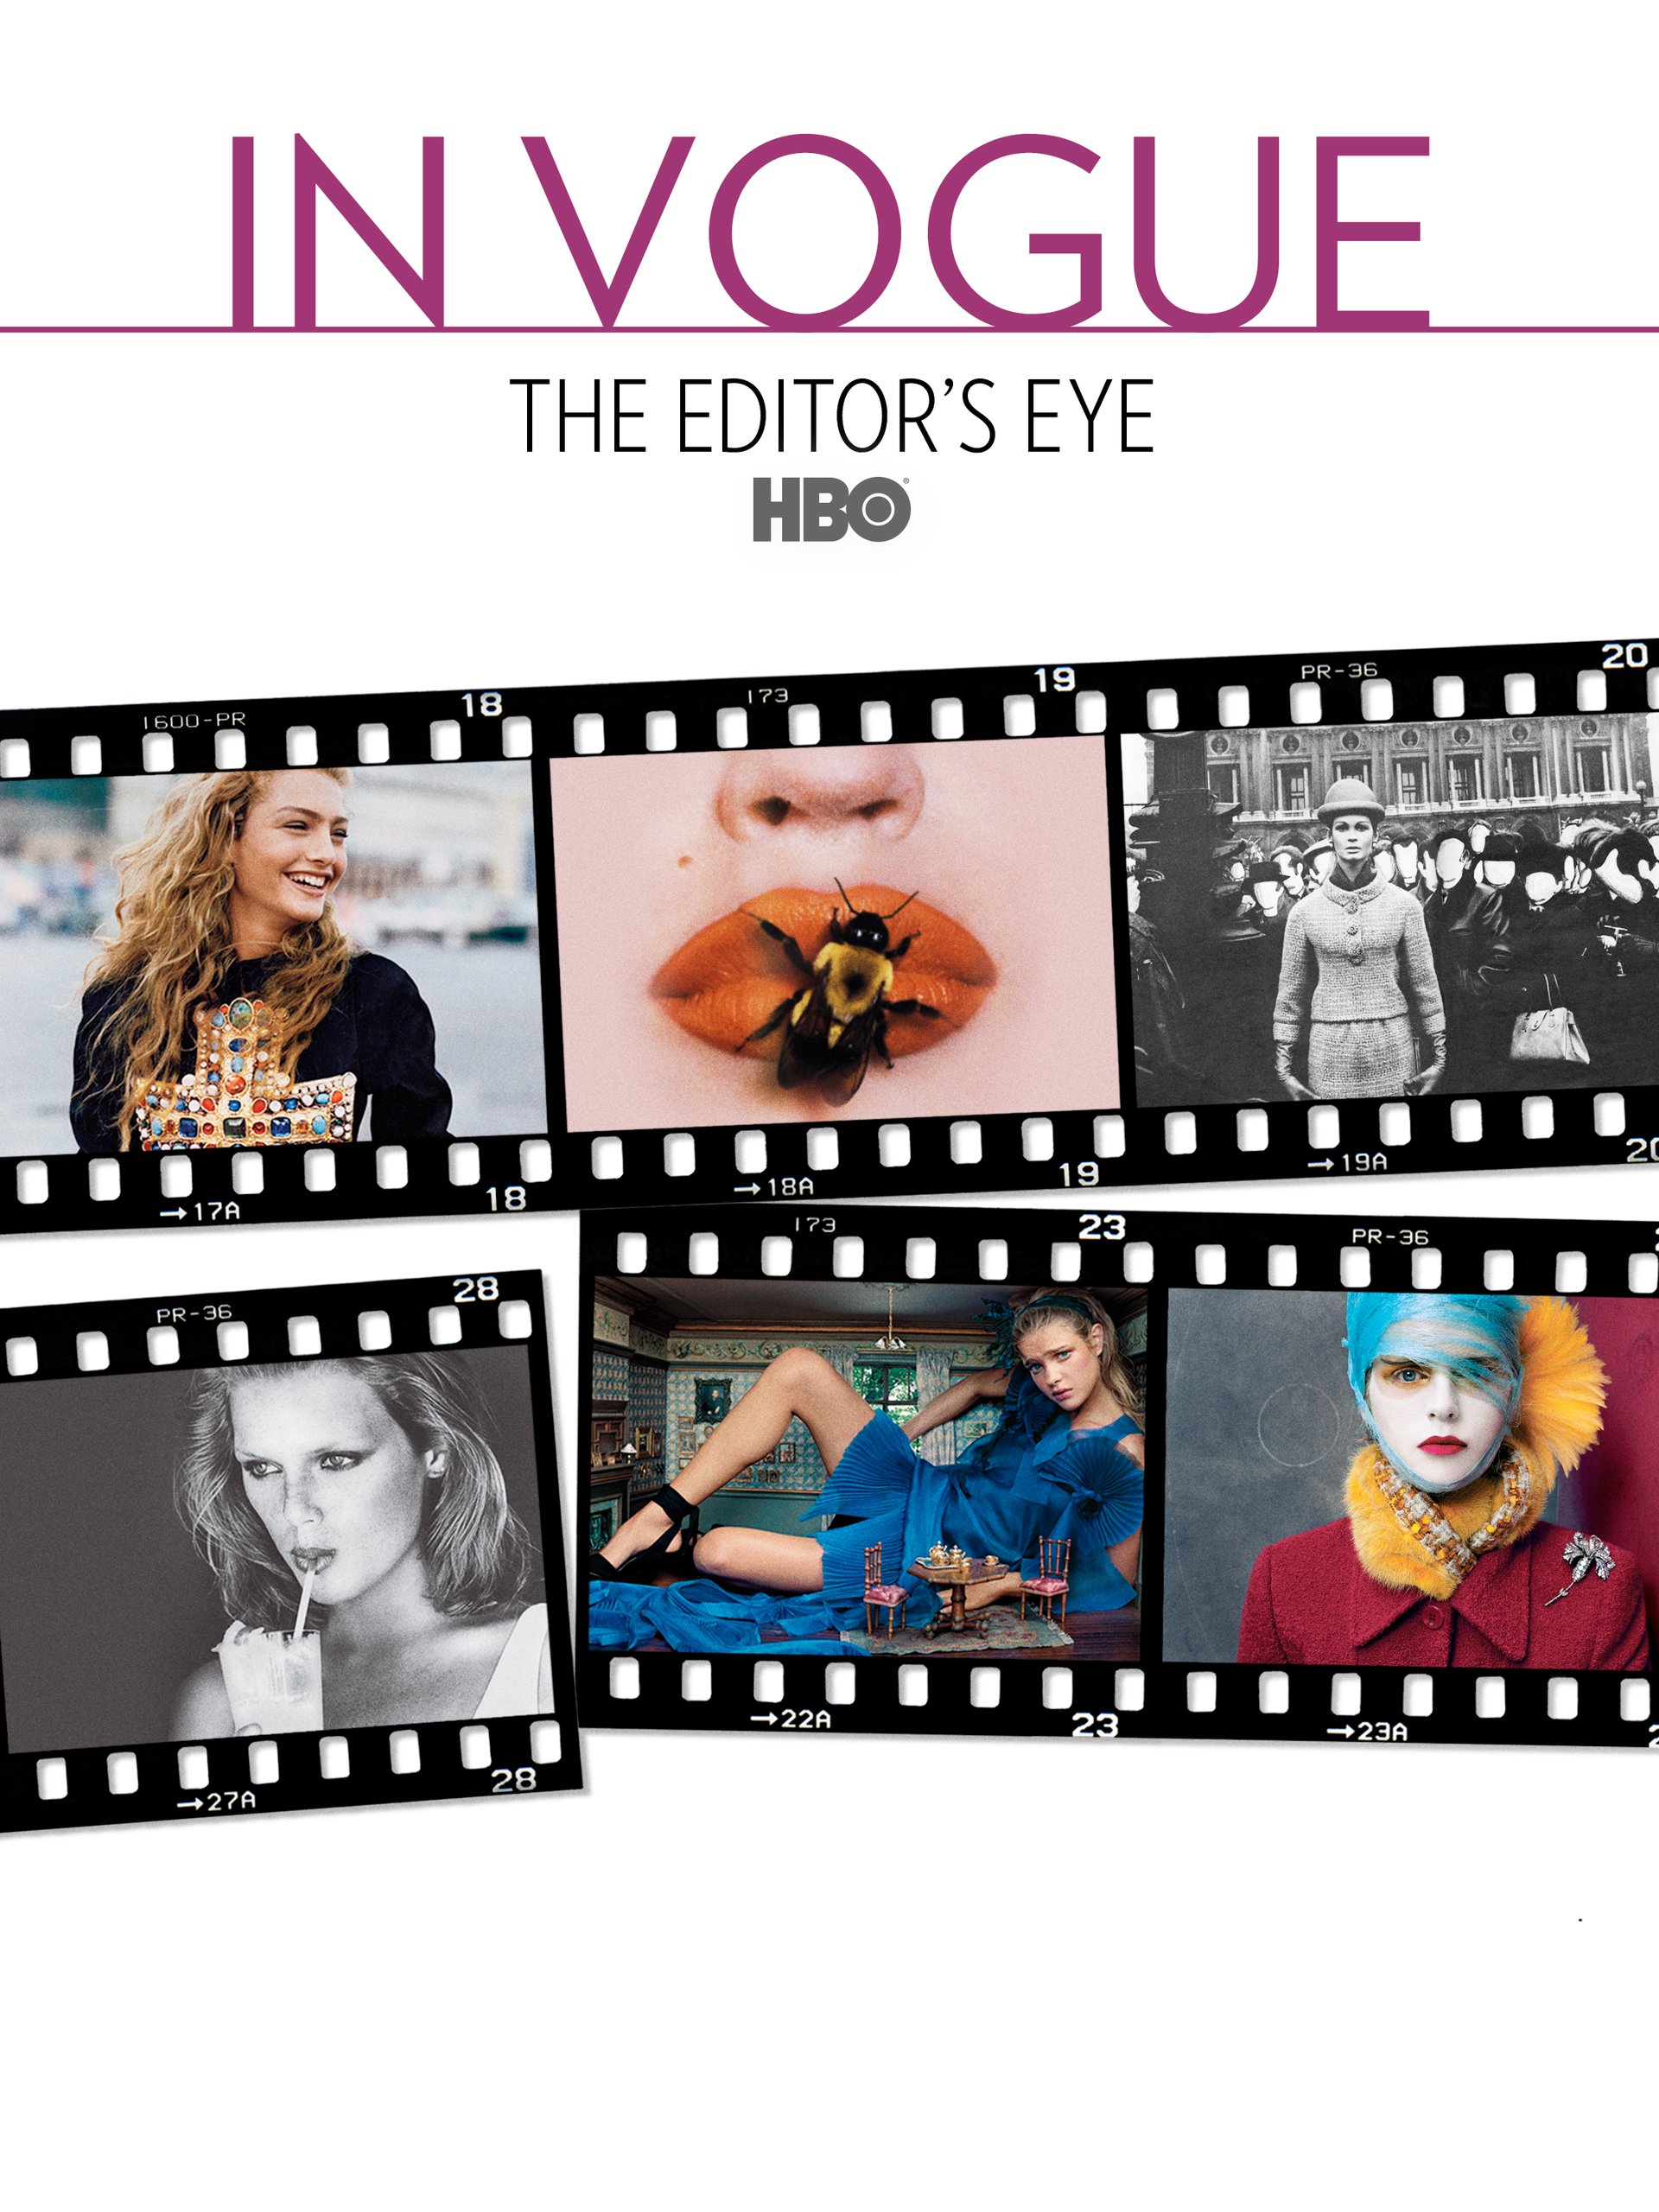 Vogue the editors eye